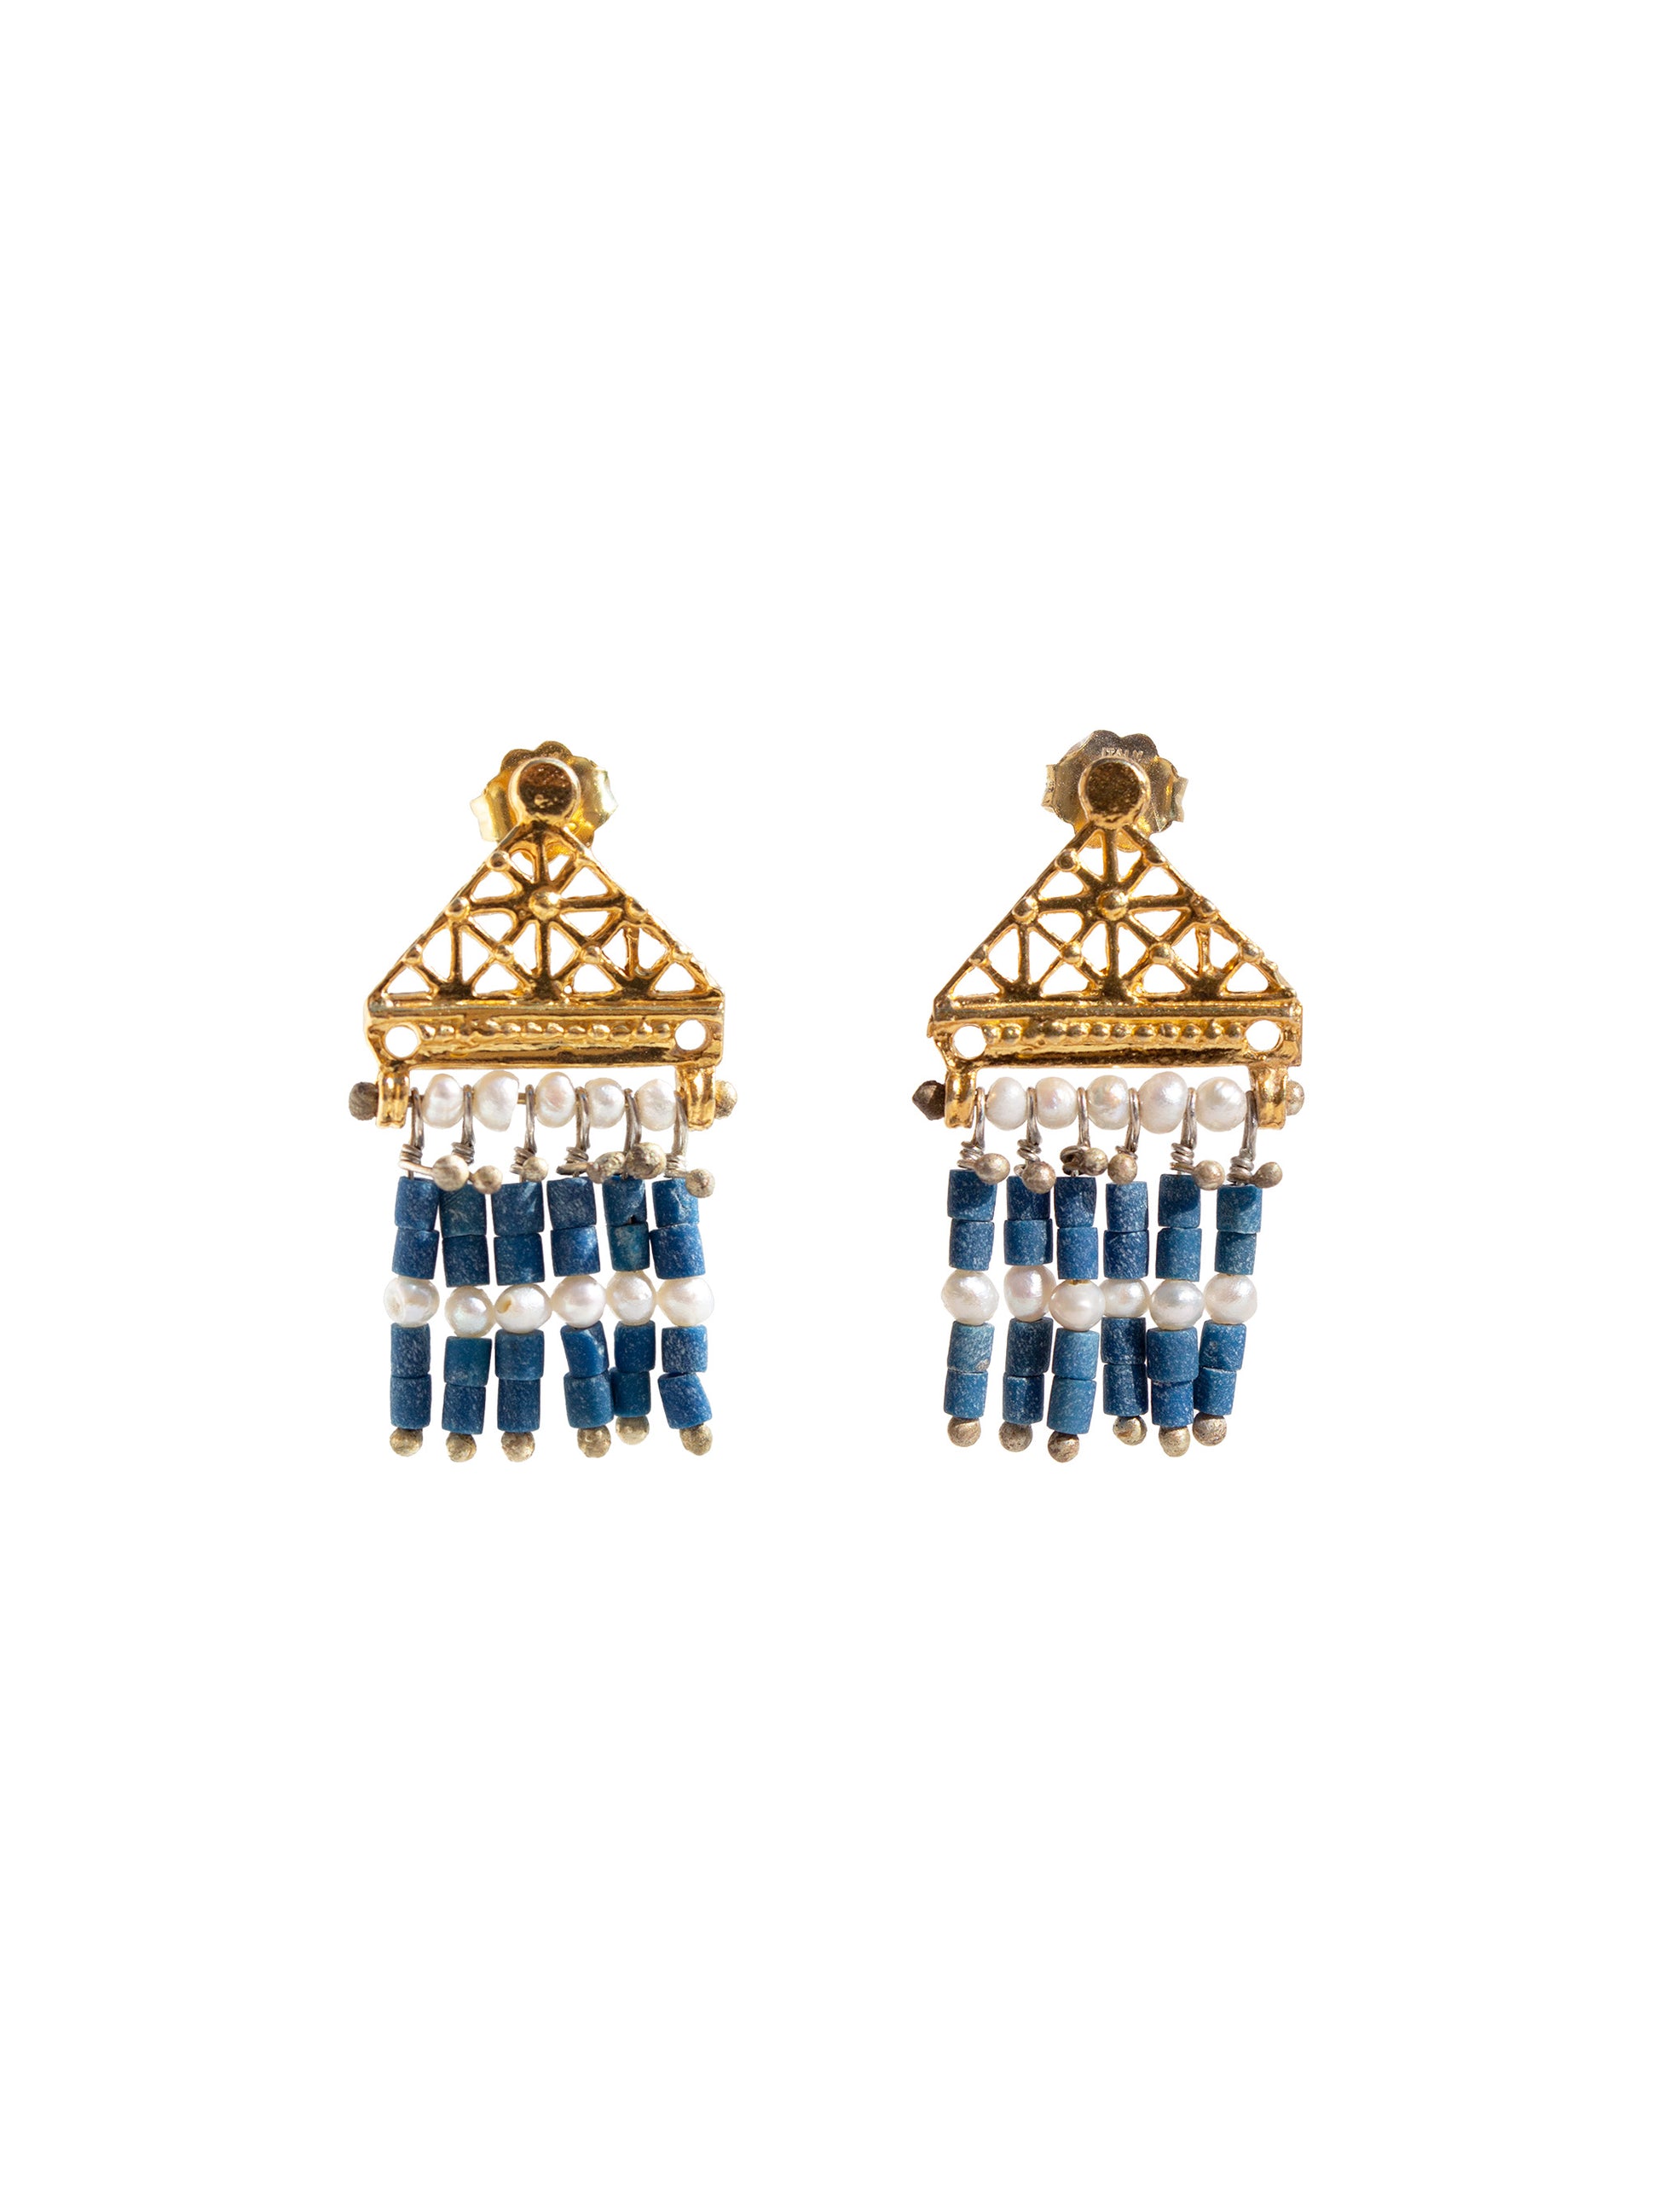 Lapis lazuli and pearl elegant earrings with sun disk binding 